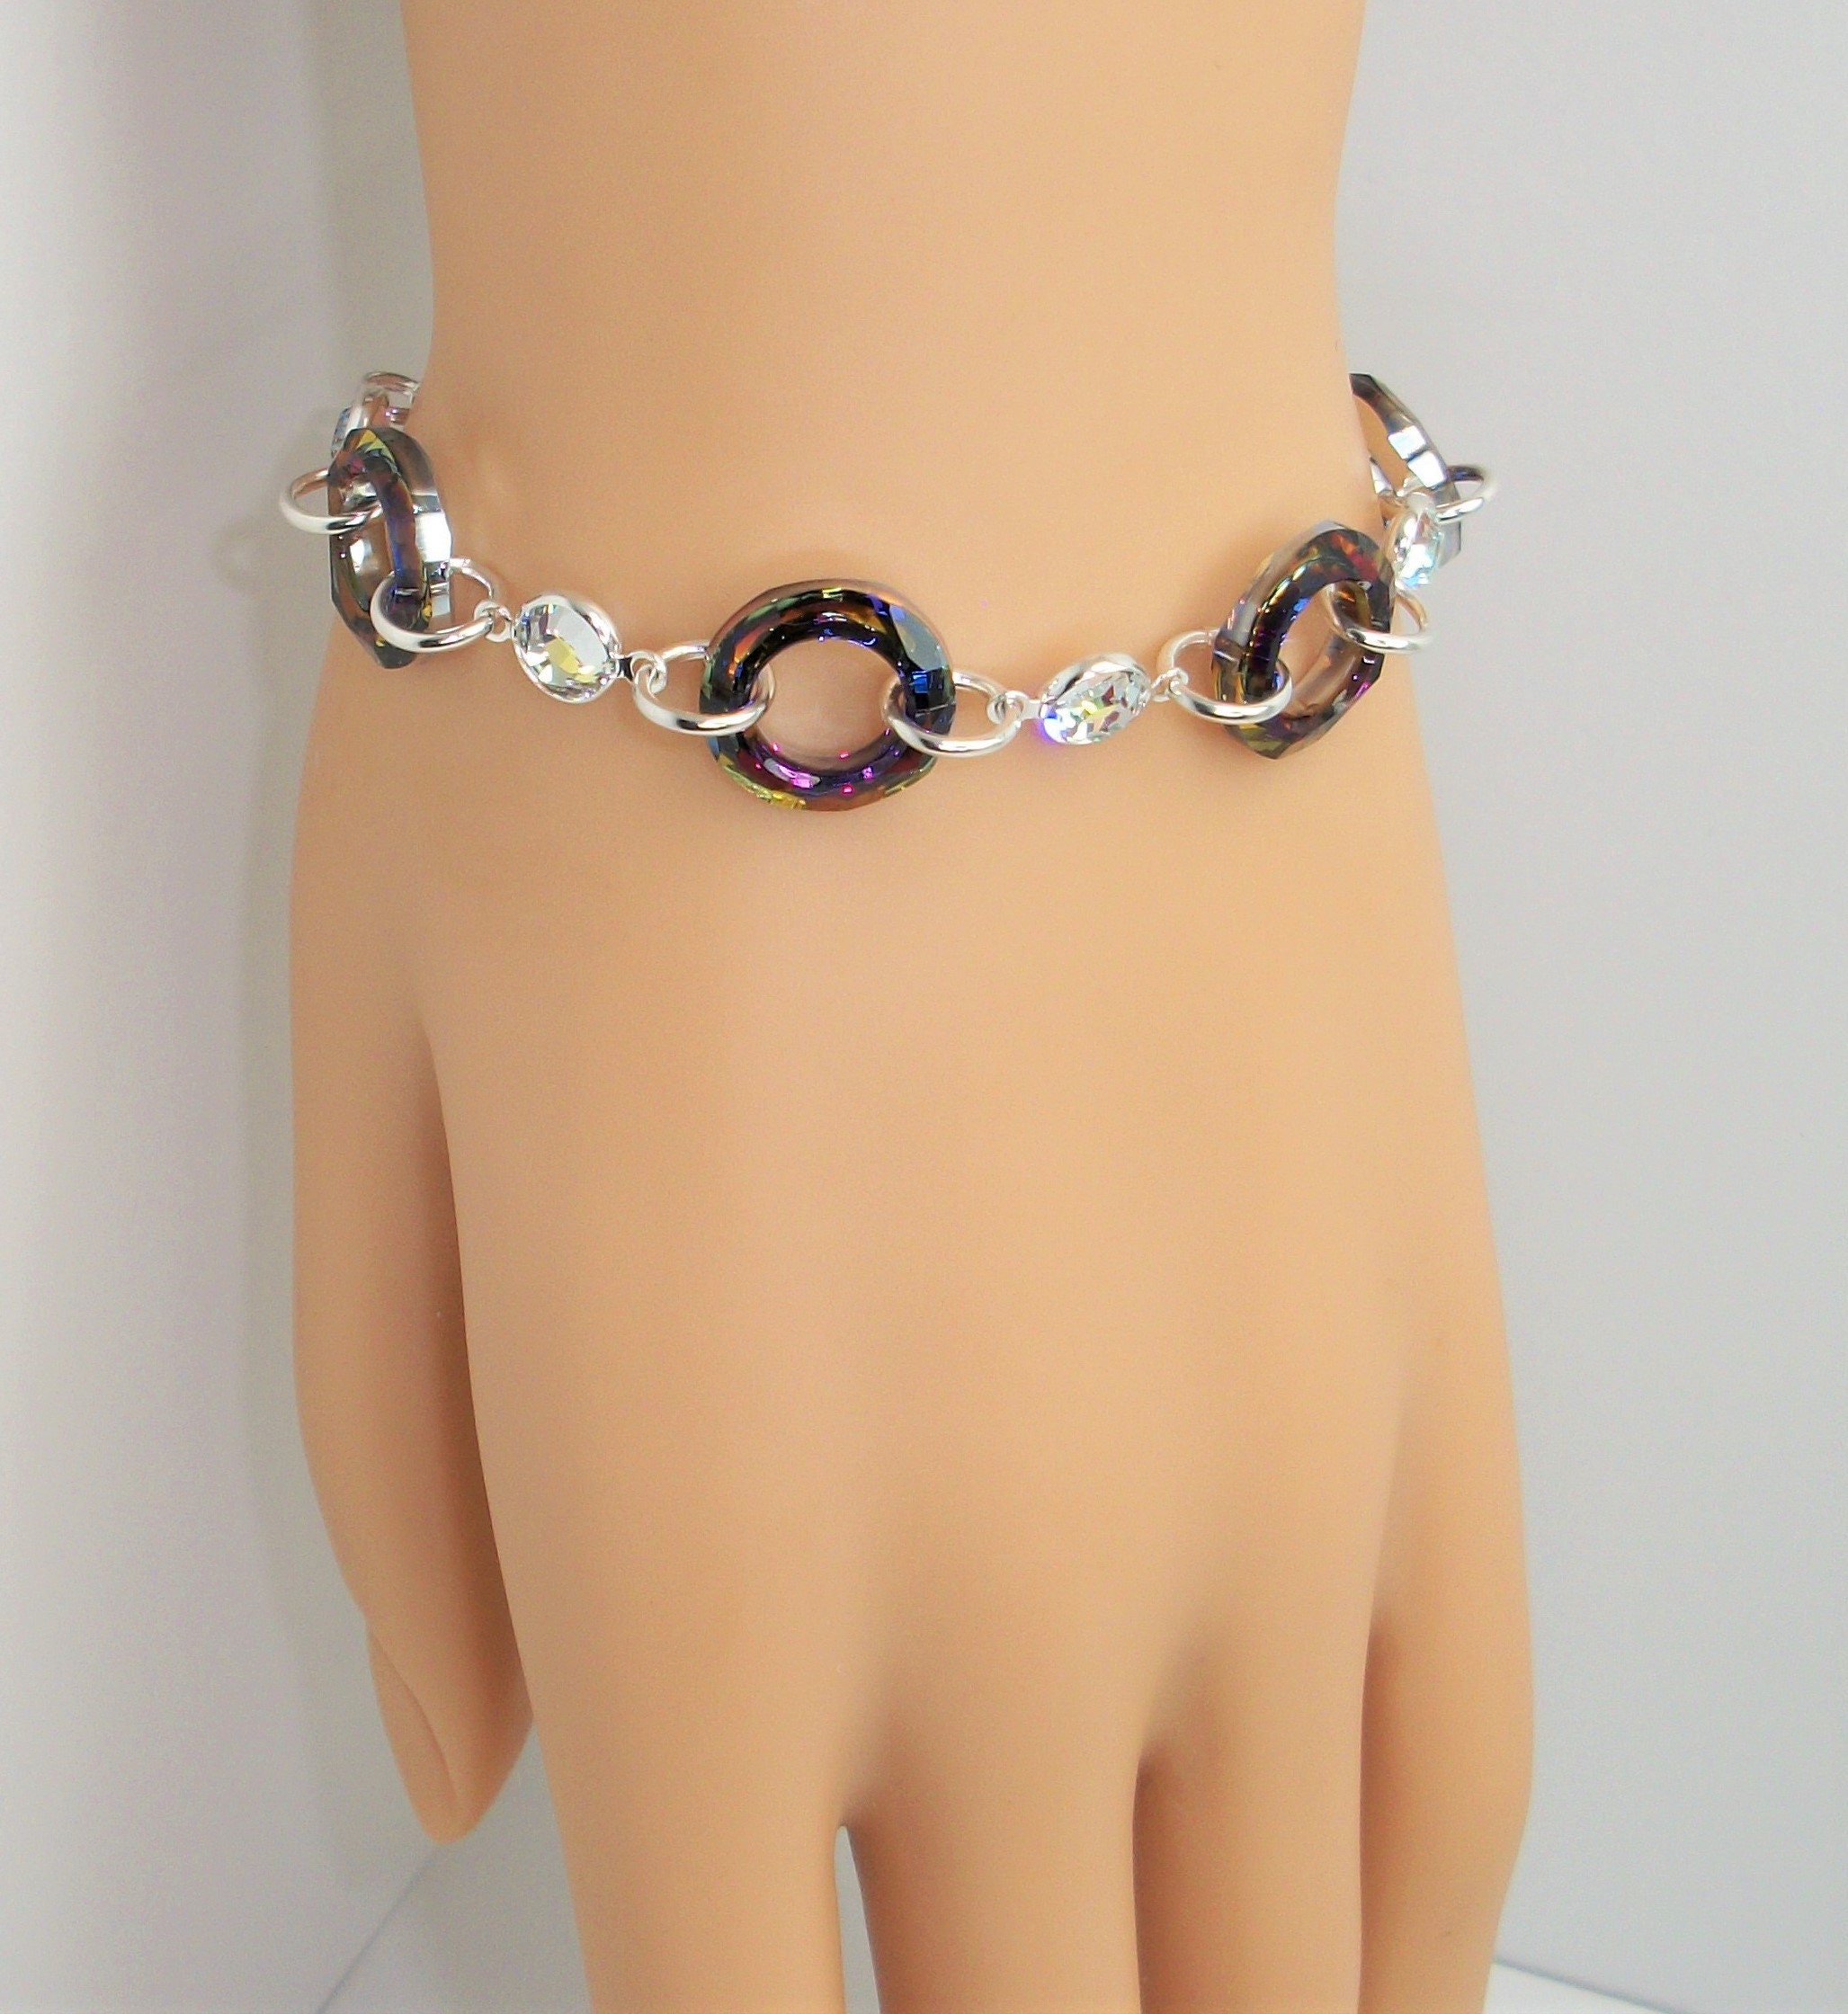 Finger bracelet silver plated chain with Swarovski crystals hand crafted.  Orange | eBay